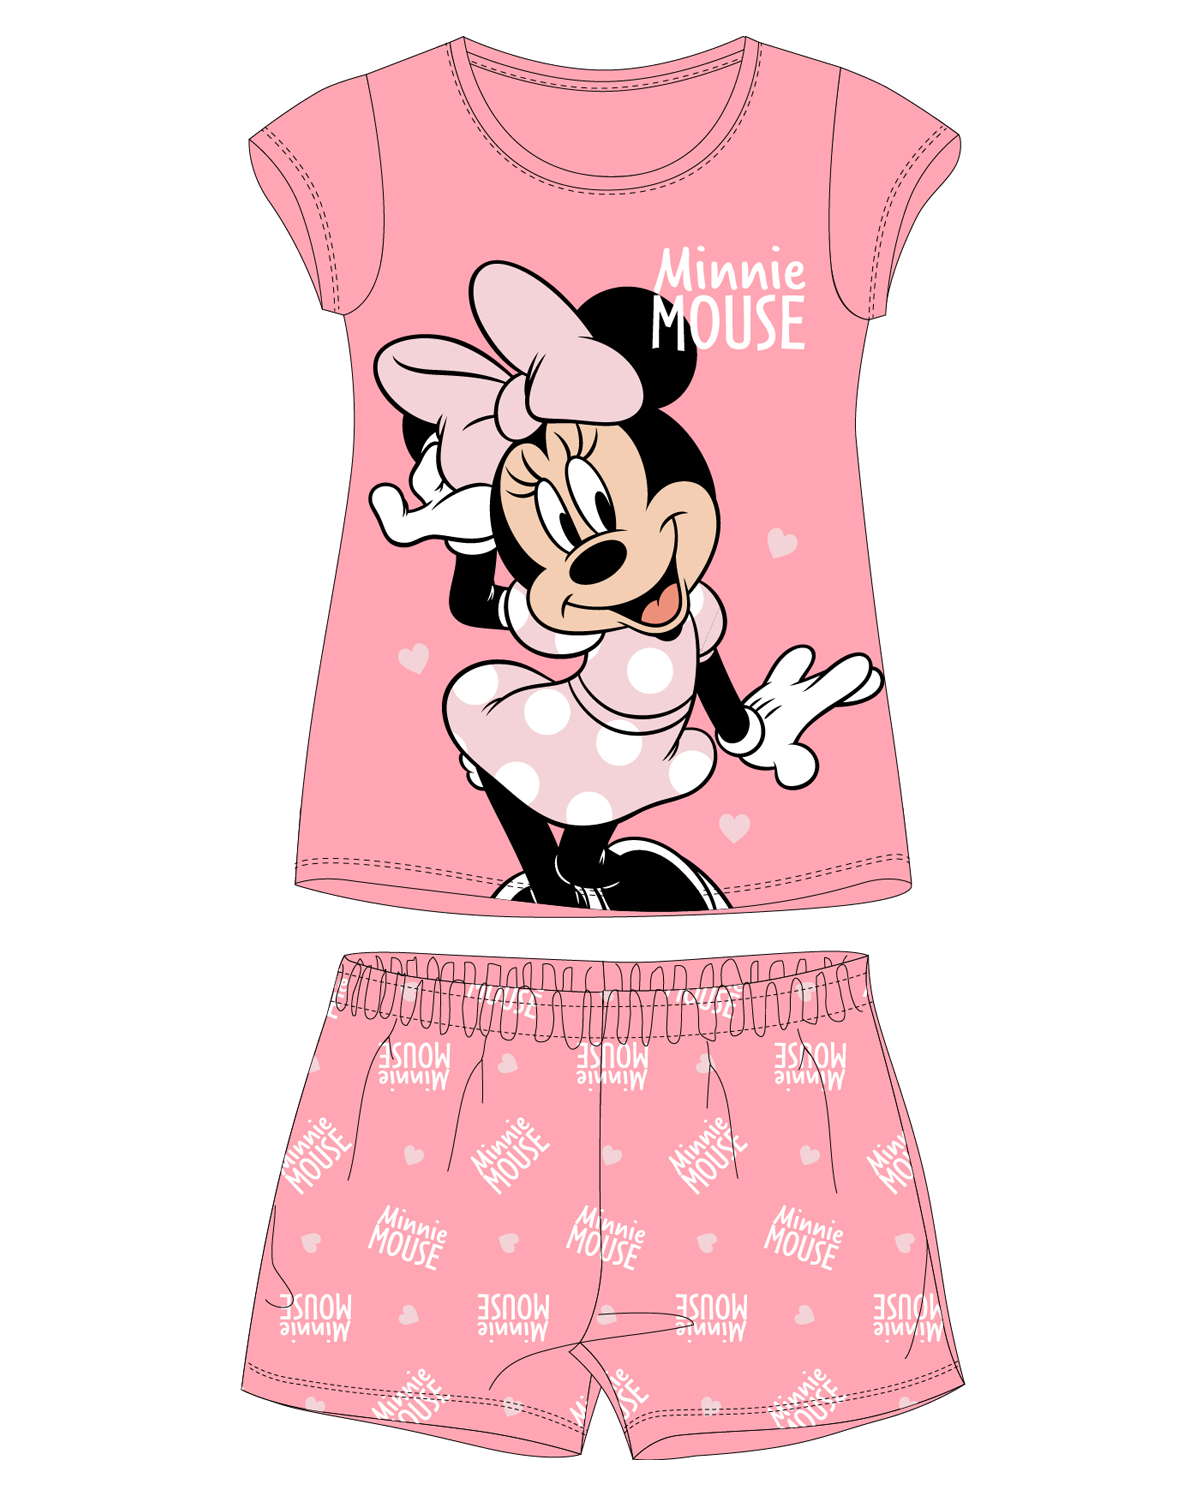 Minnie Mouse - licence Dívčí pyžamo - Minnie Mouse 5204B351W, růžová Barva: Růžová, Velikost: 116